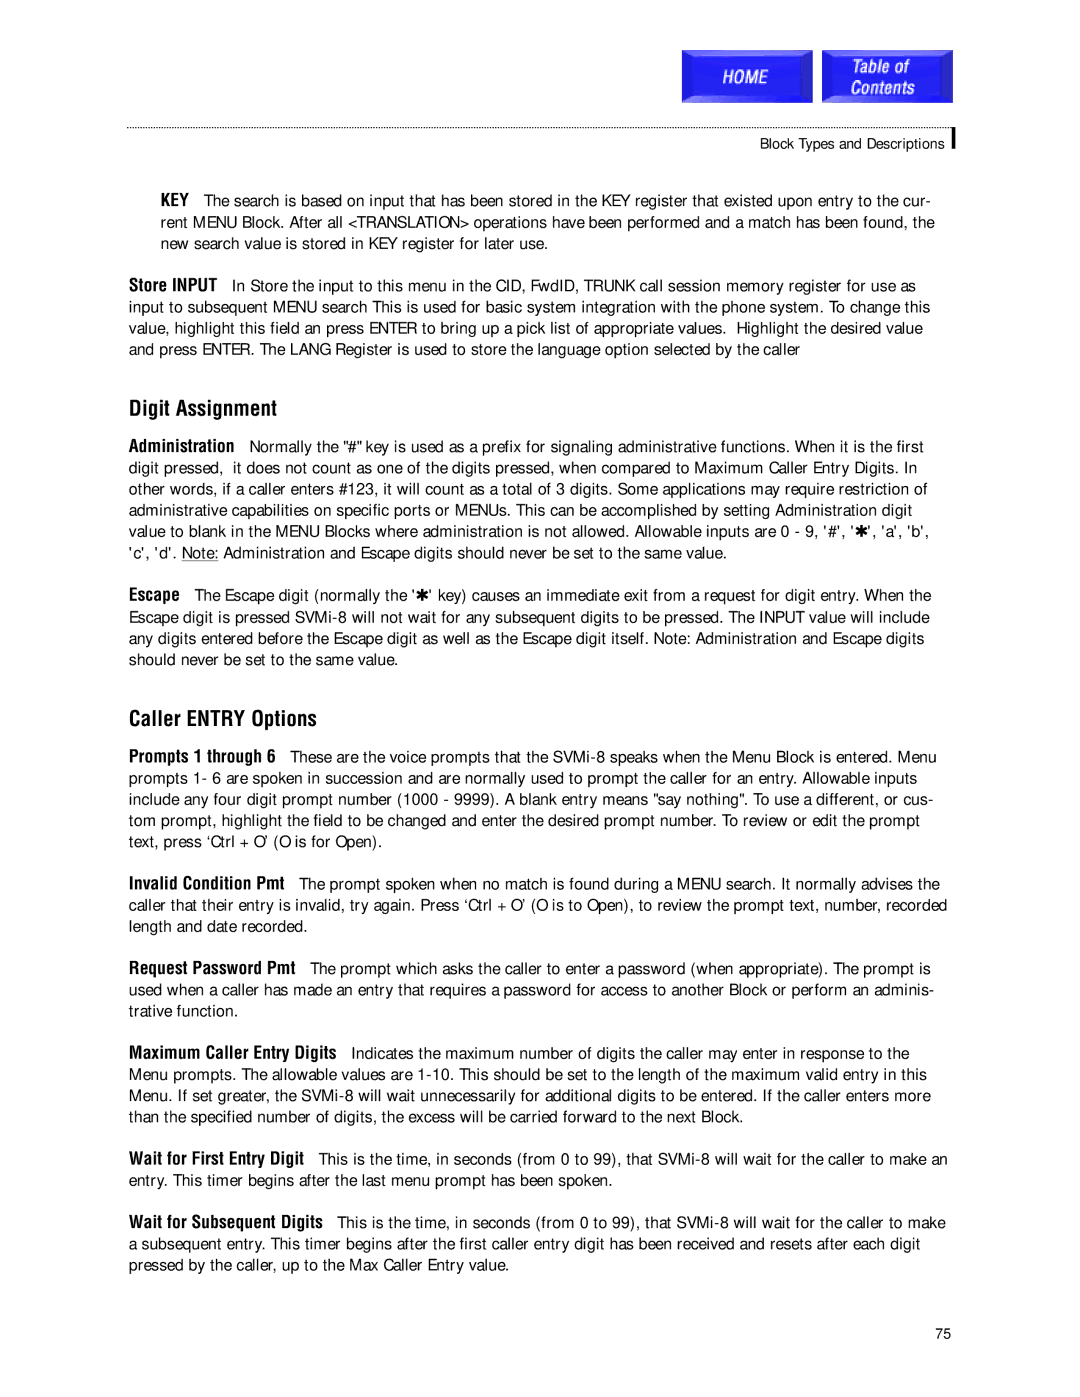 Samsung SVMi-8 technical manual Digit Assignment, Caller Entry Options 